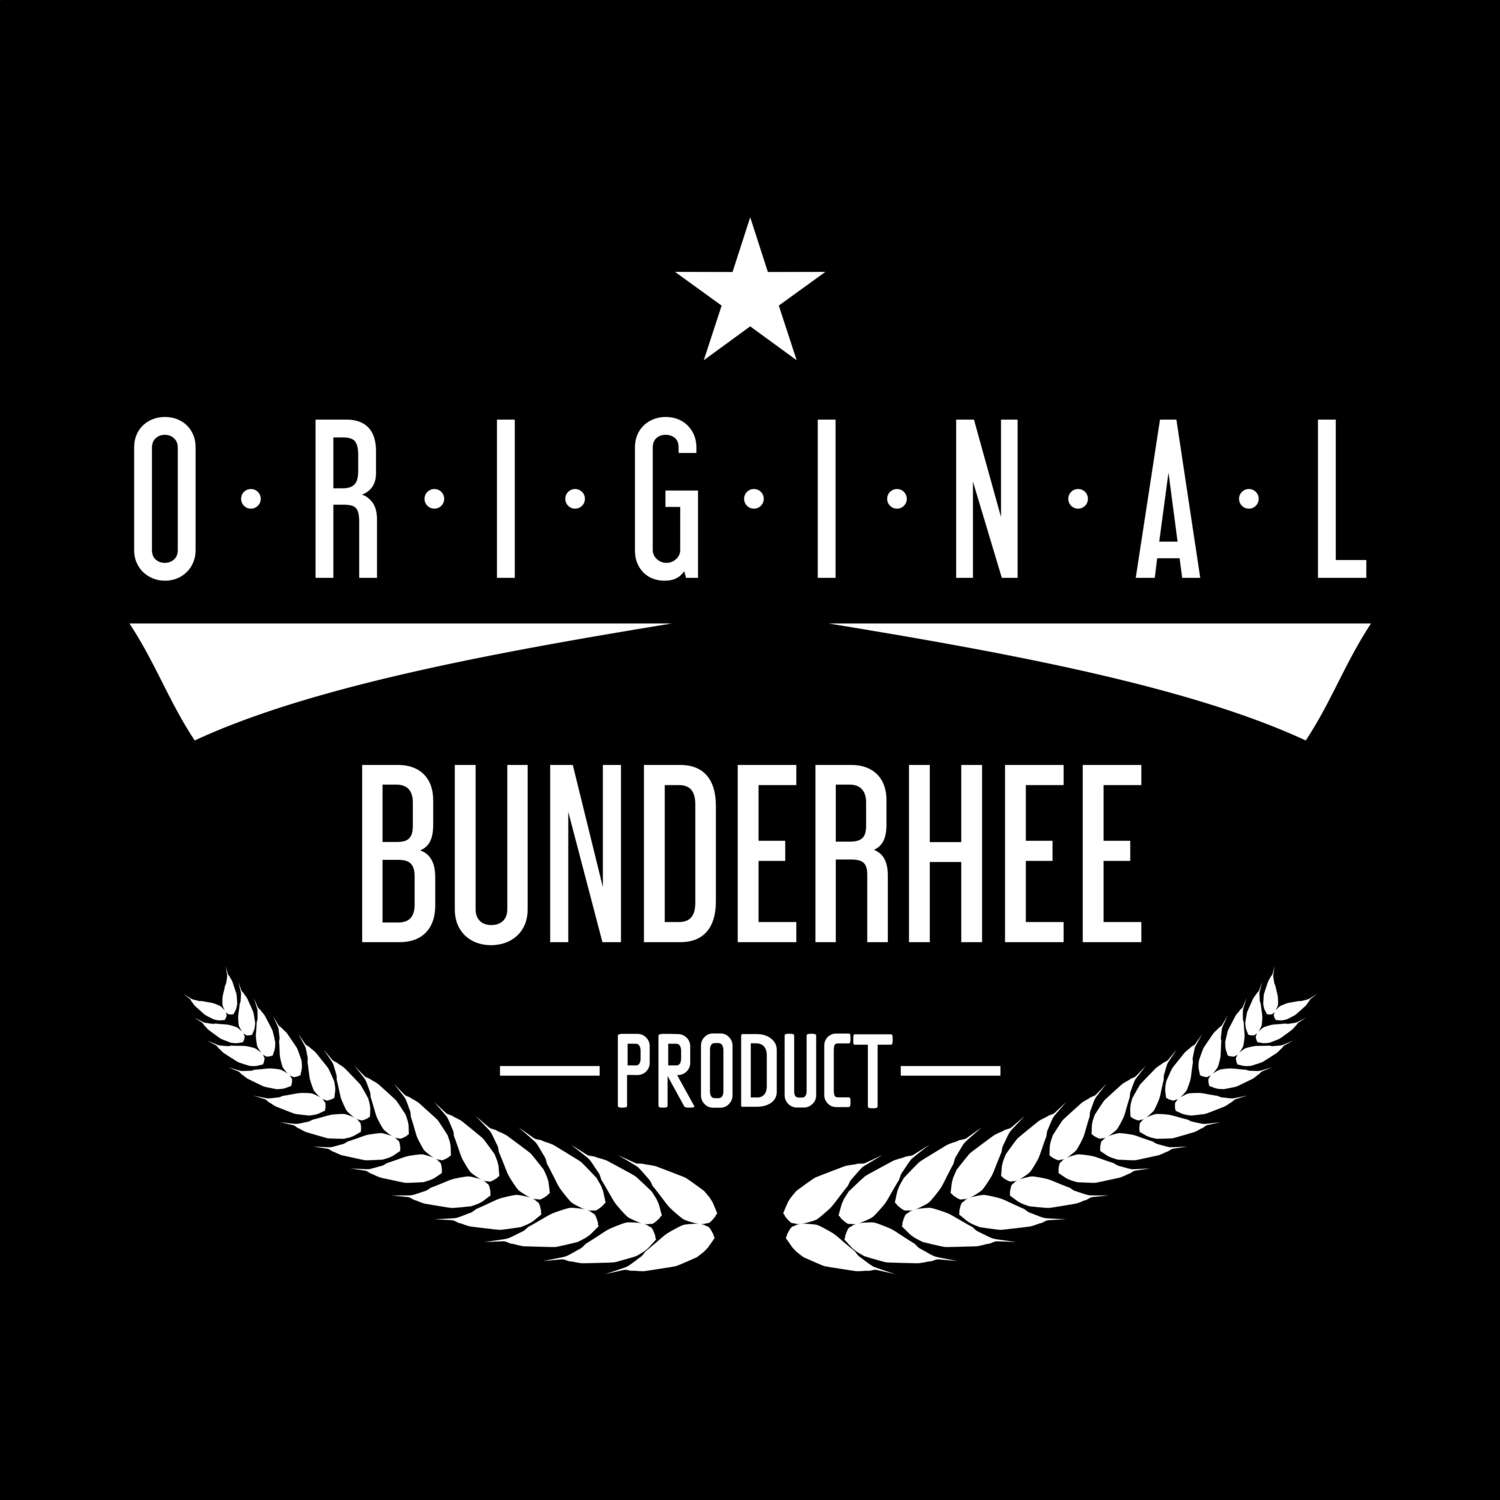 Bunderhee T-Shirt »Original Product«